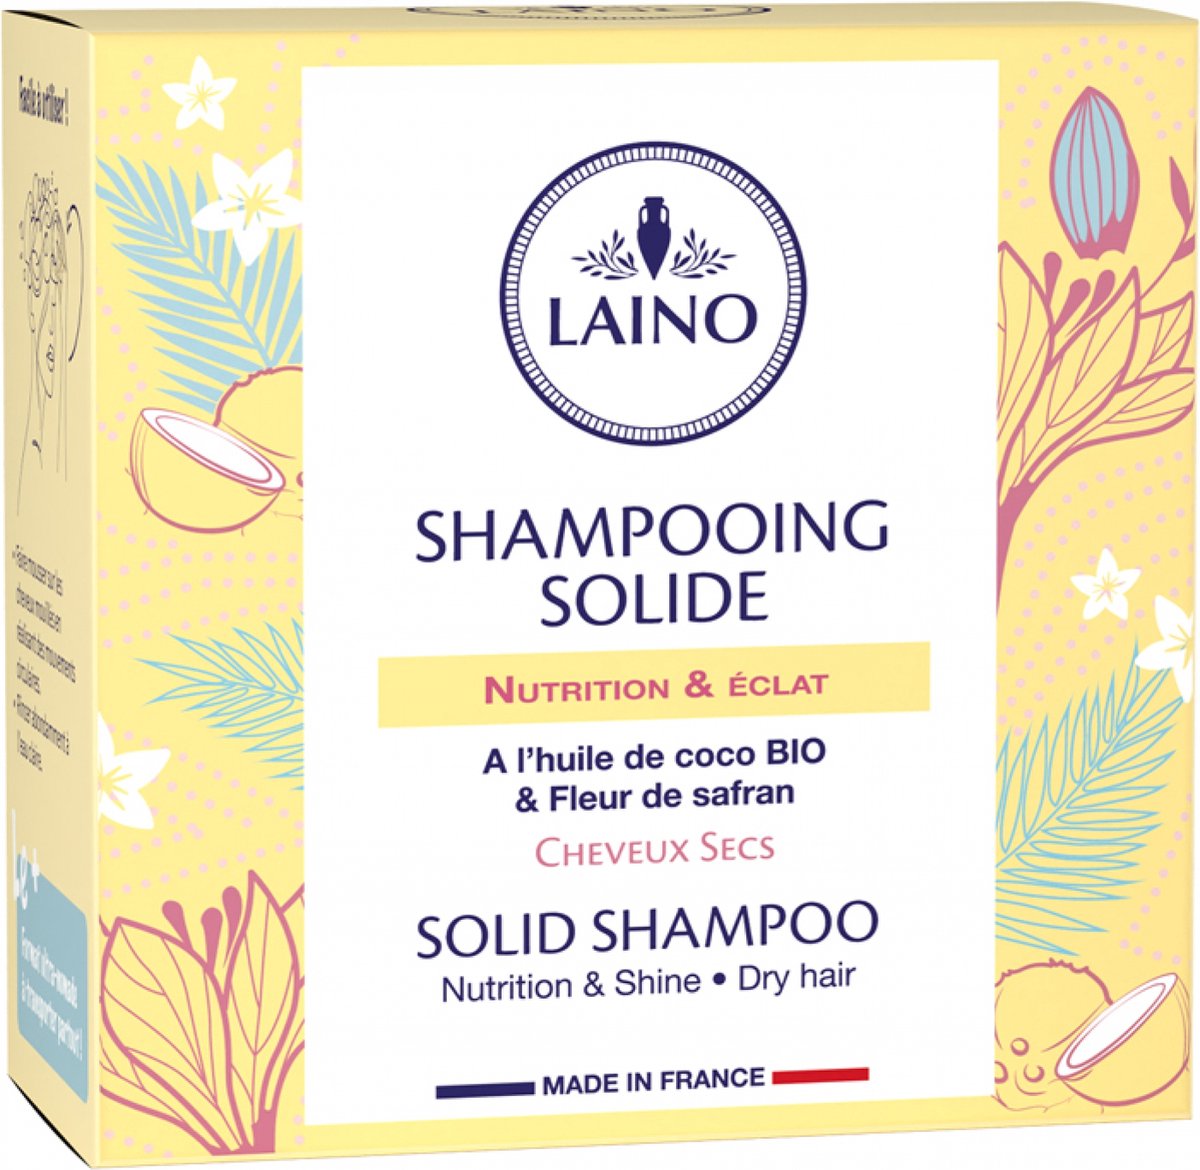 Laino Solid Shampoo Nutrition & Radiance Droog Haar 60 g